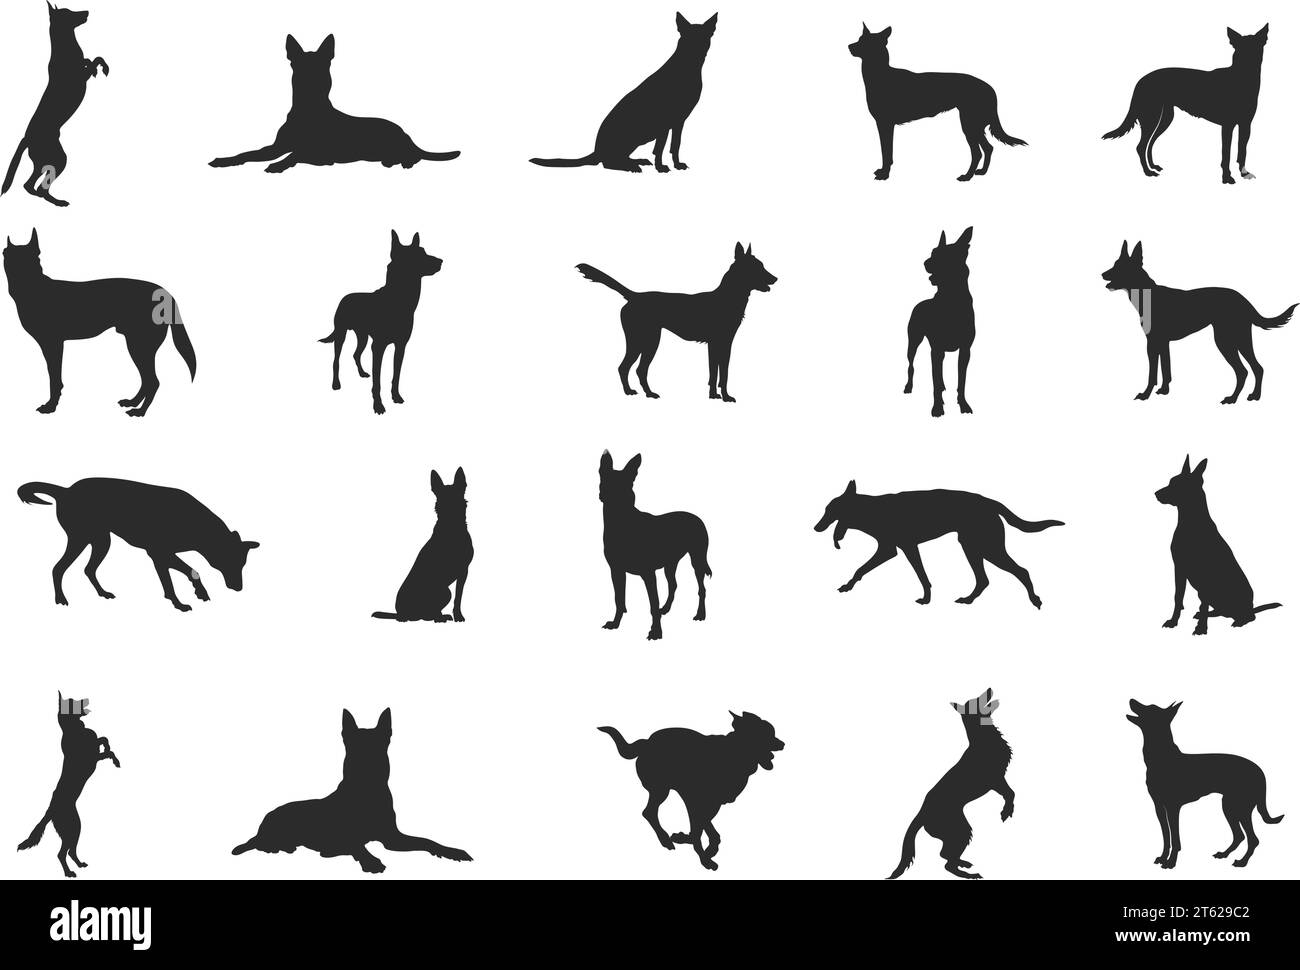 Belgian malinois silhouette, Belgian malinois dog silhouettes, Dog silhouettes, Dog icon, Belgian malinois clipart, Dog vector illustration. Stock Vector